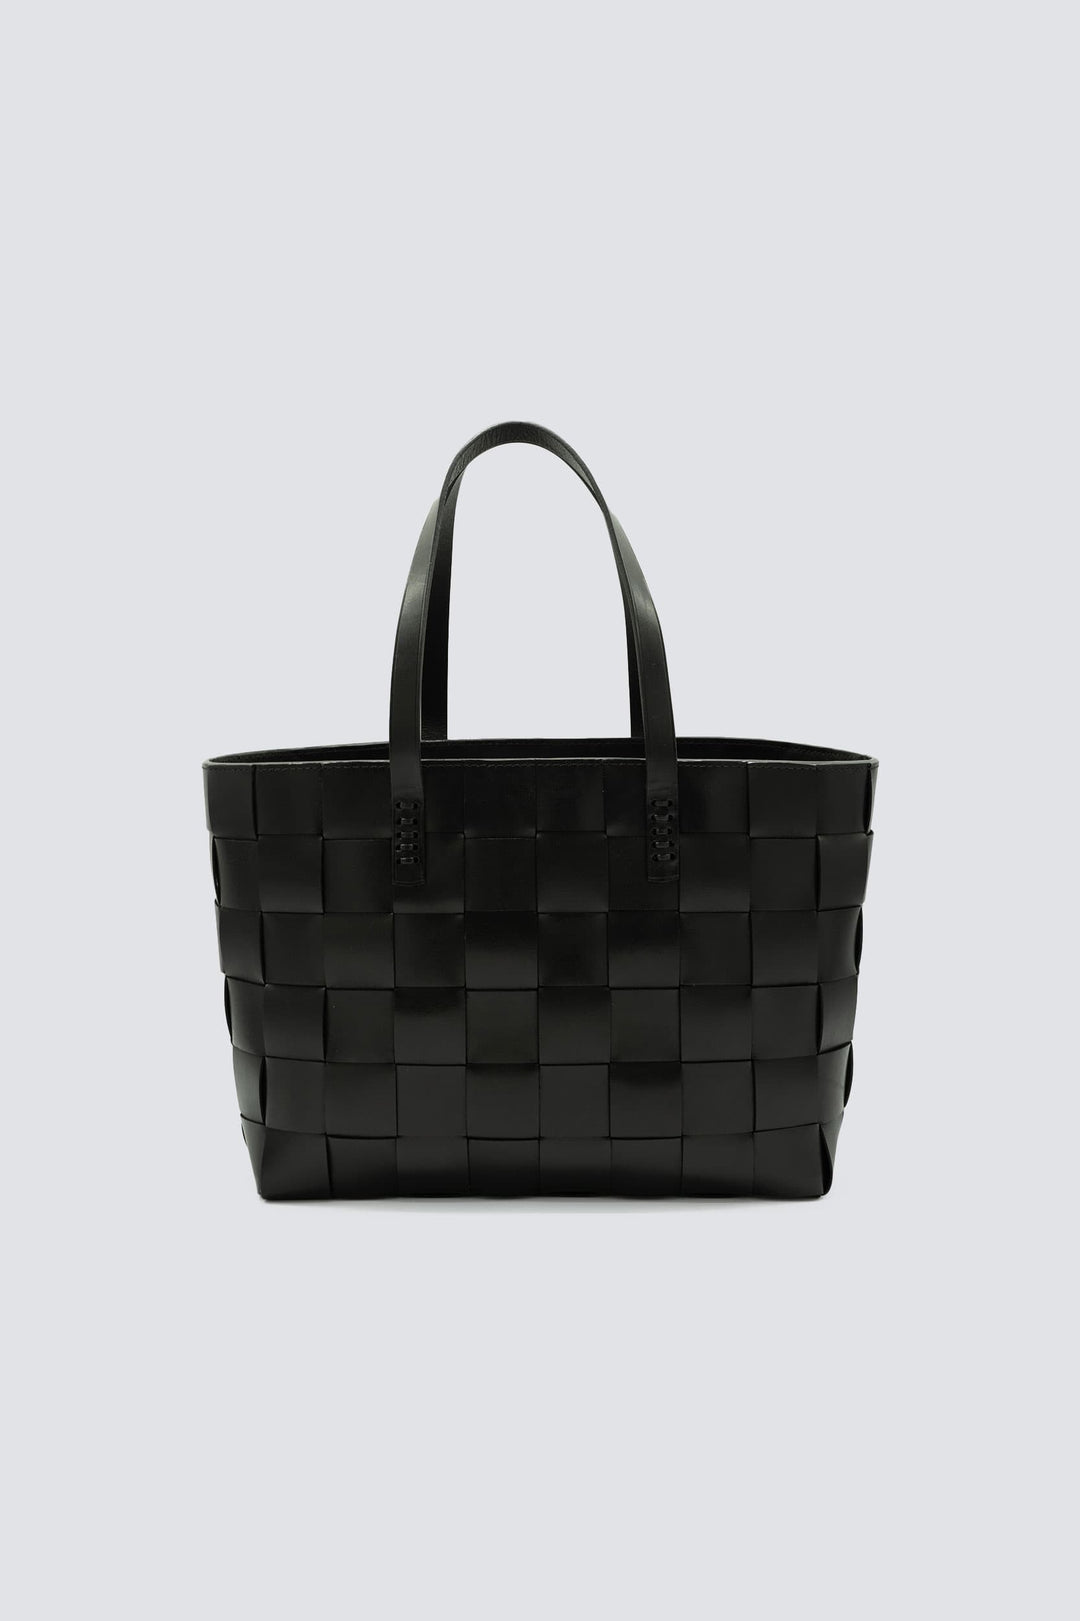 Dragon Diffusion woven leather bag handmade - Japan Tote Black